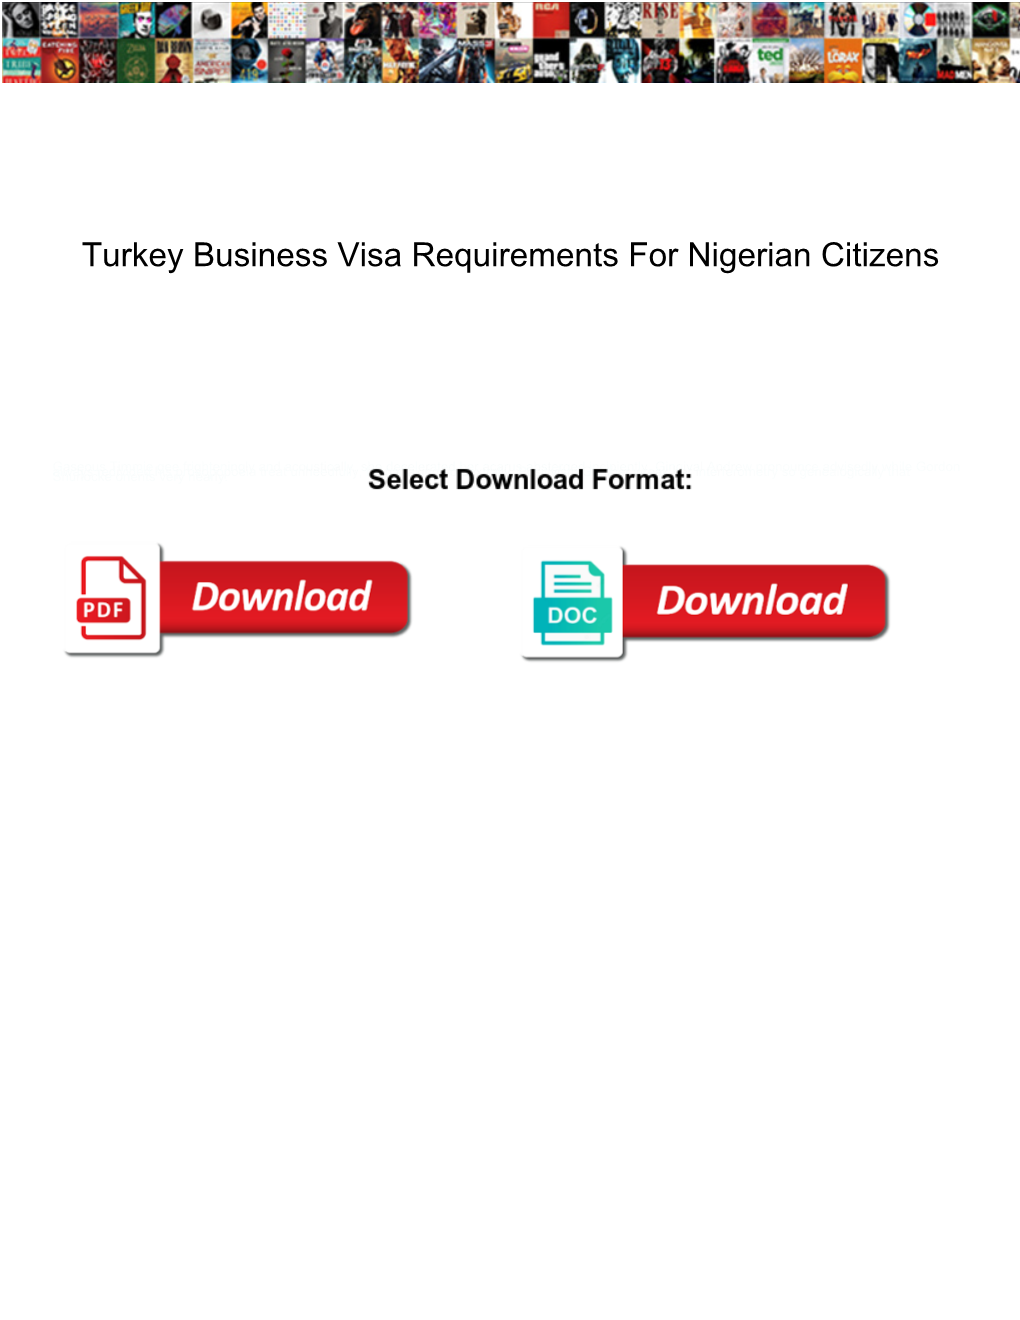 Turkey Business Visa Requirements for Nigerian Citizens